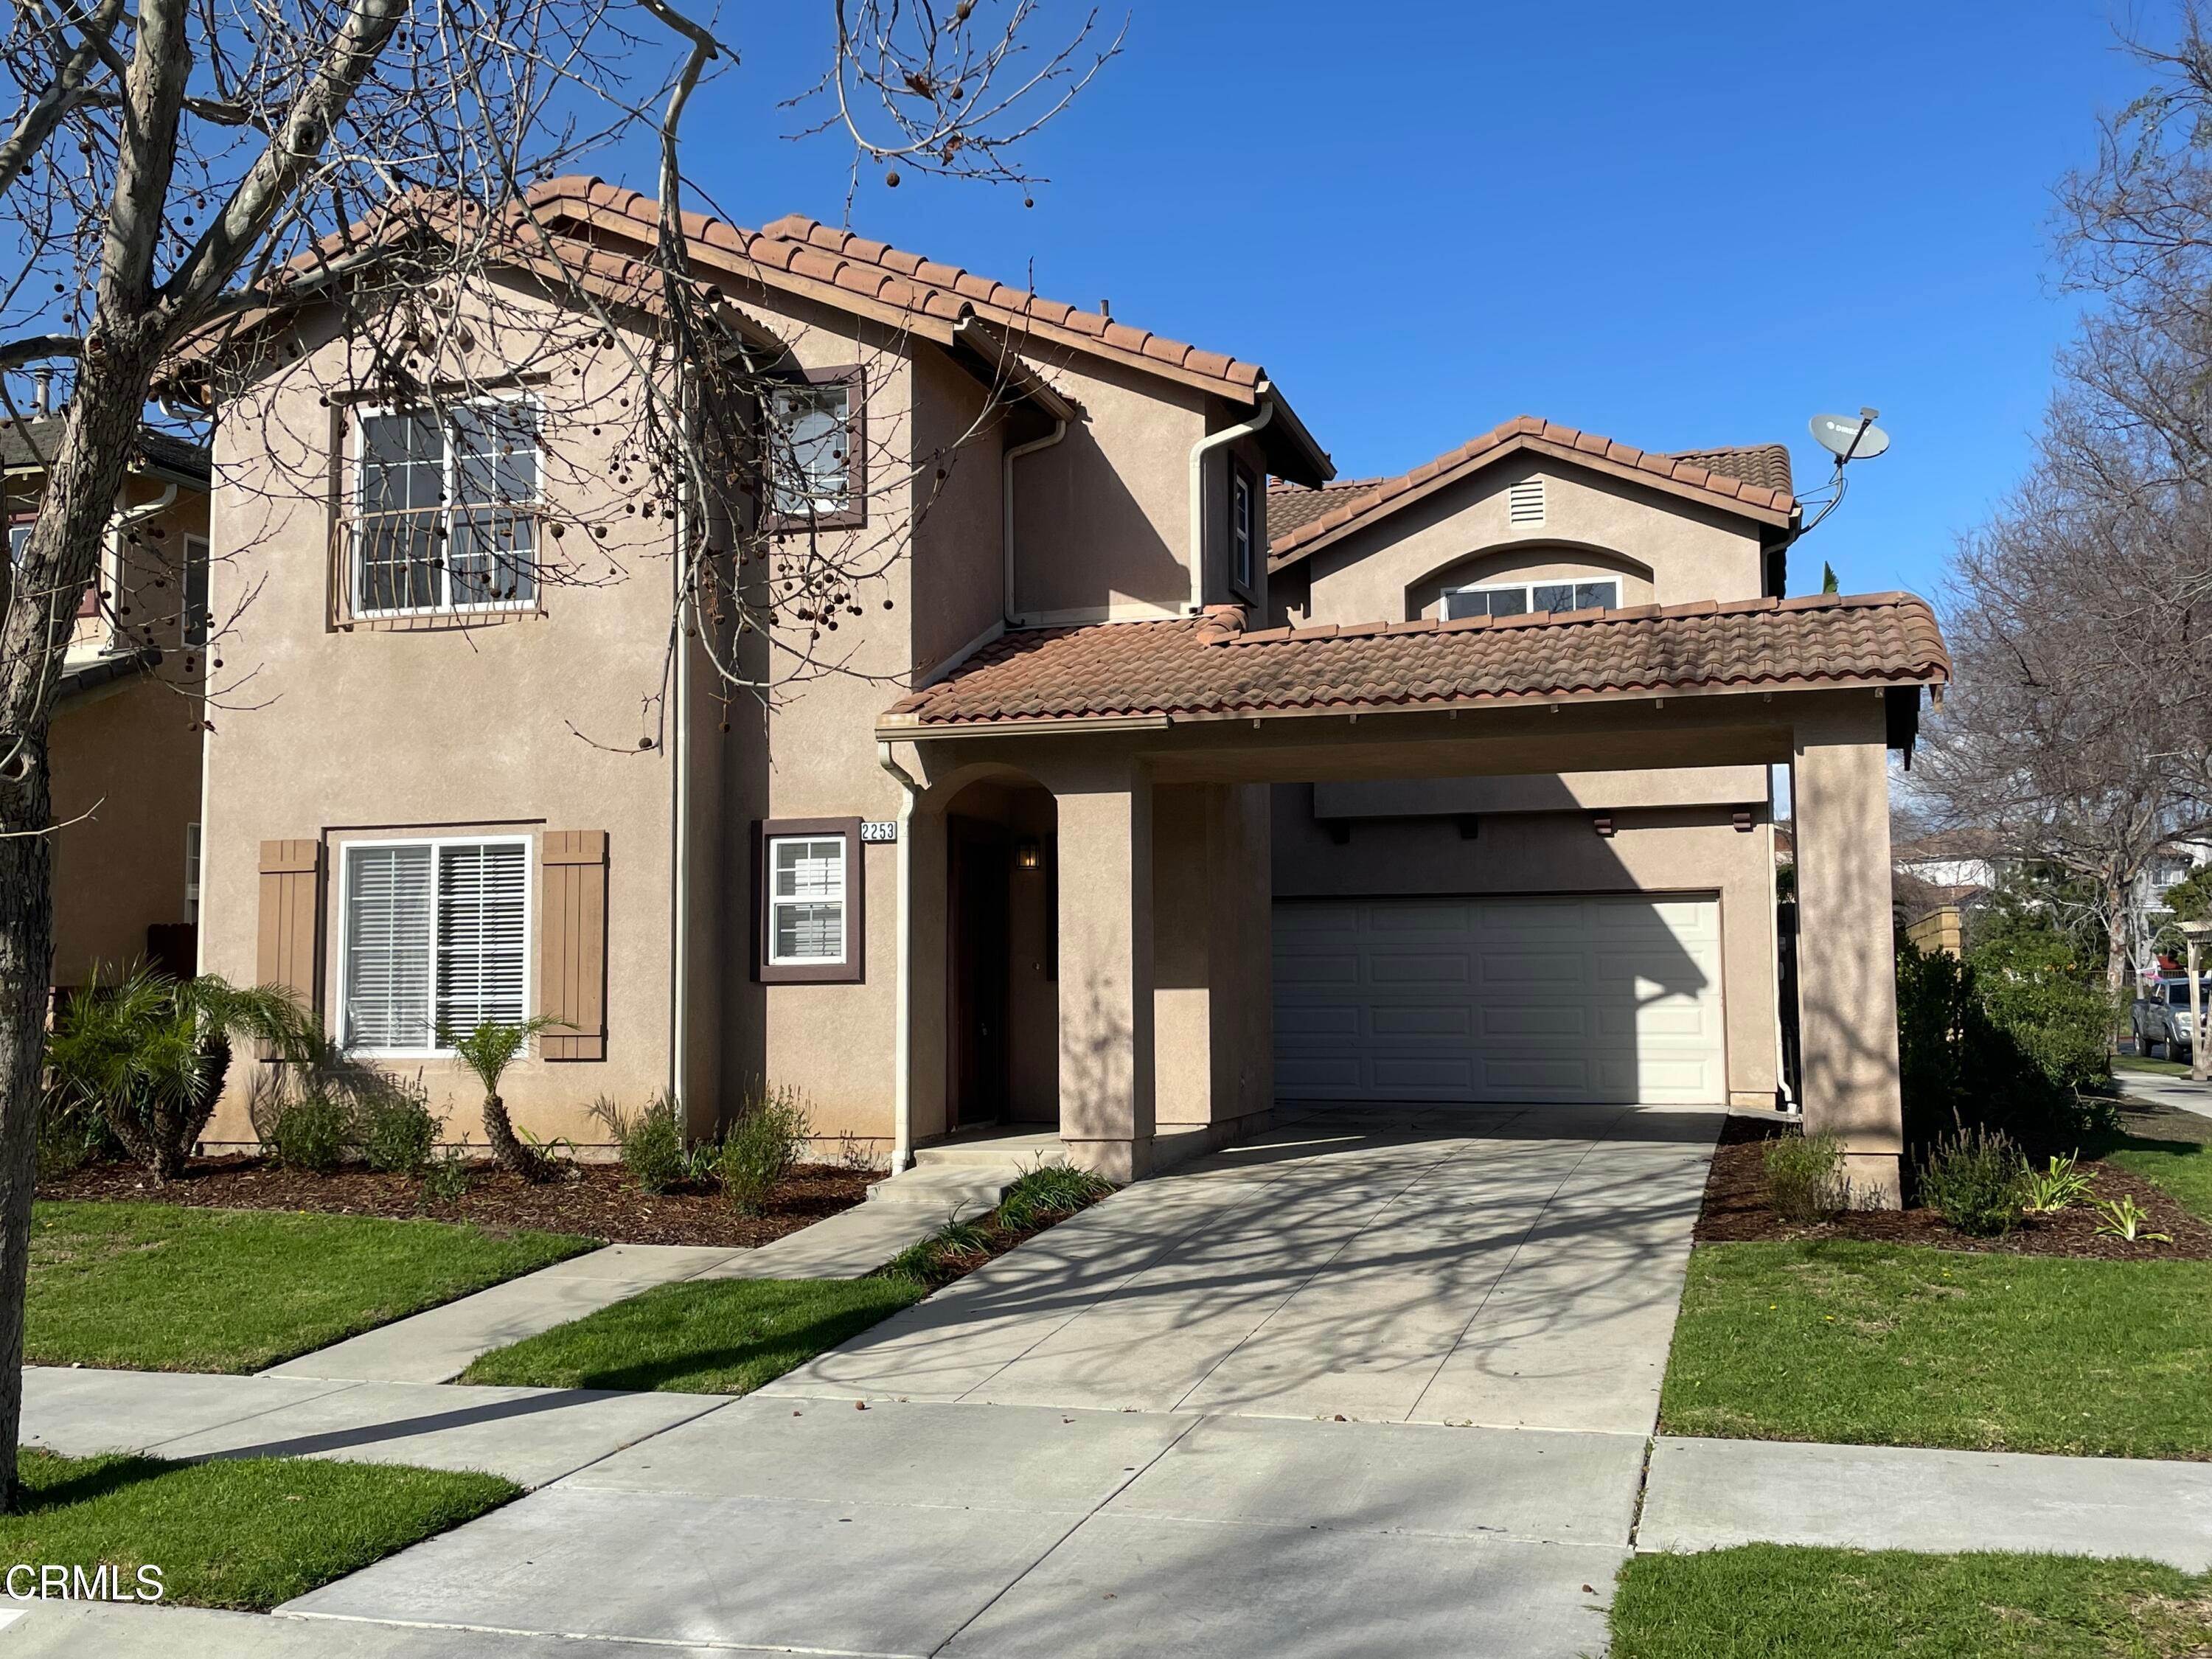 1. Single Family Homes for Sale at 2253 Pajaro Street Oxnard, California 93030 United States